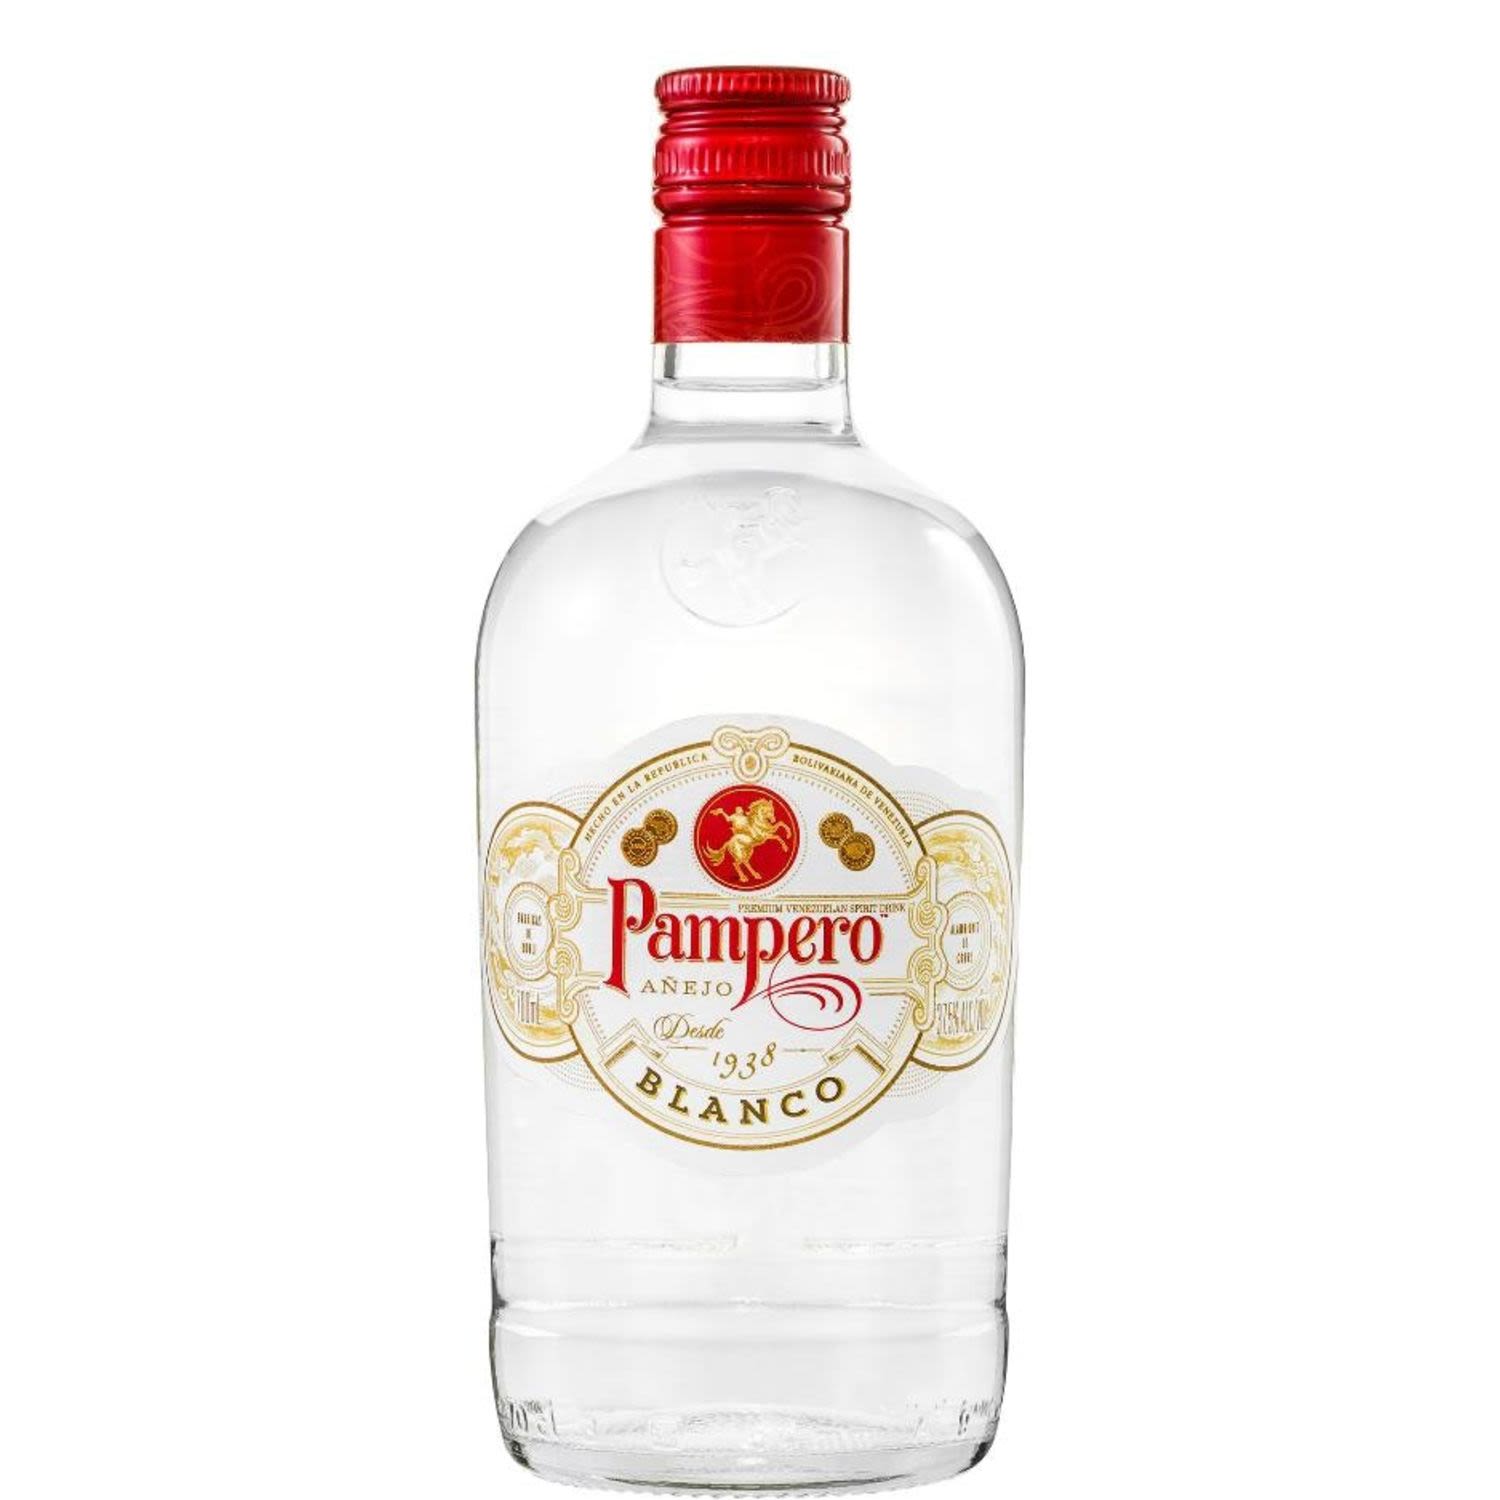 Pampero Blanco Rum 700mL Bottle